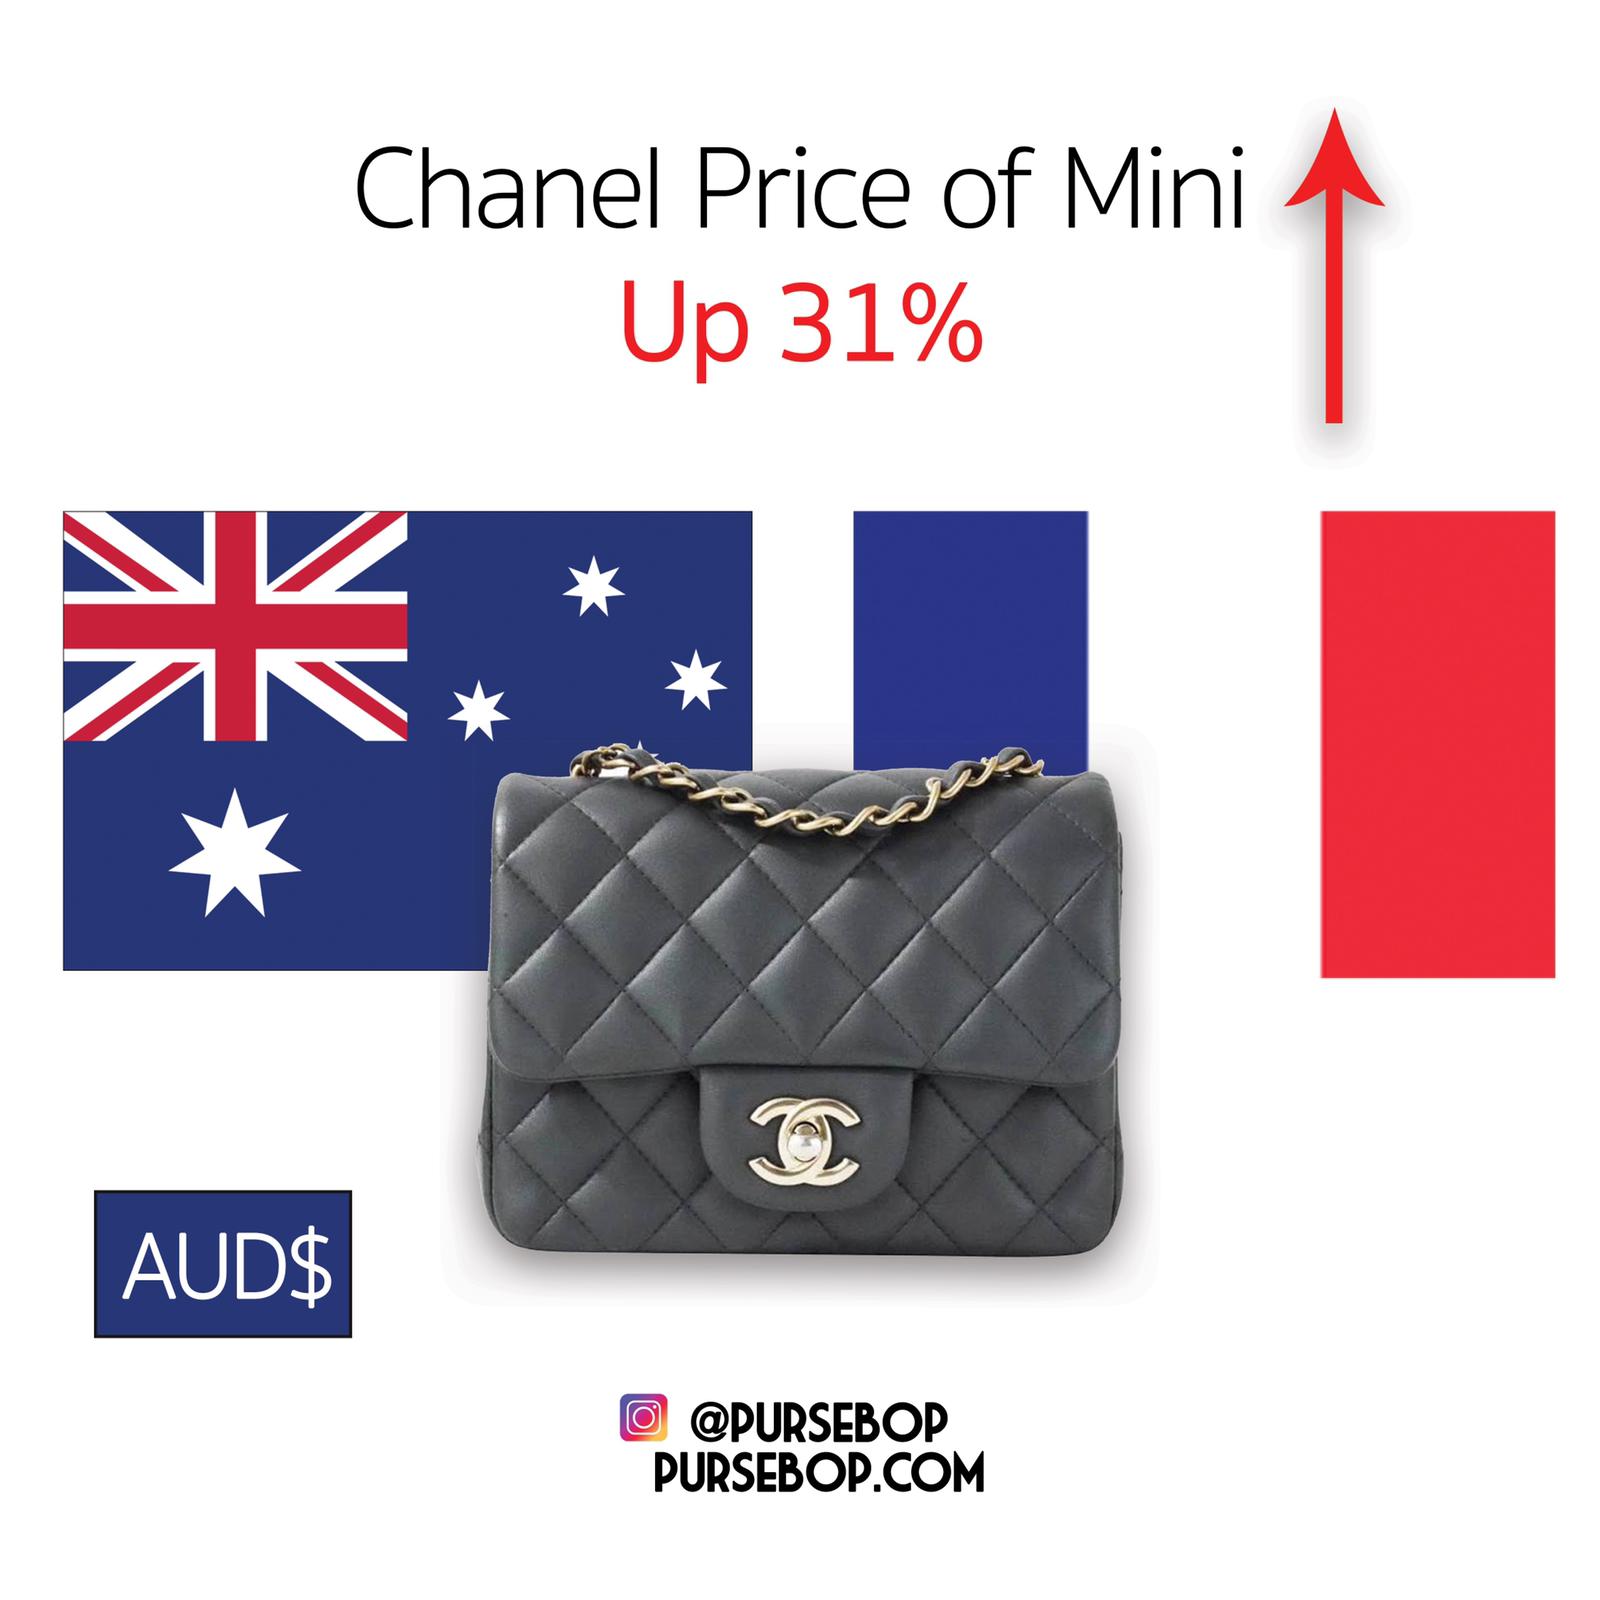 Australia Faces the Steepest Chanel Price Increase - PurseBop